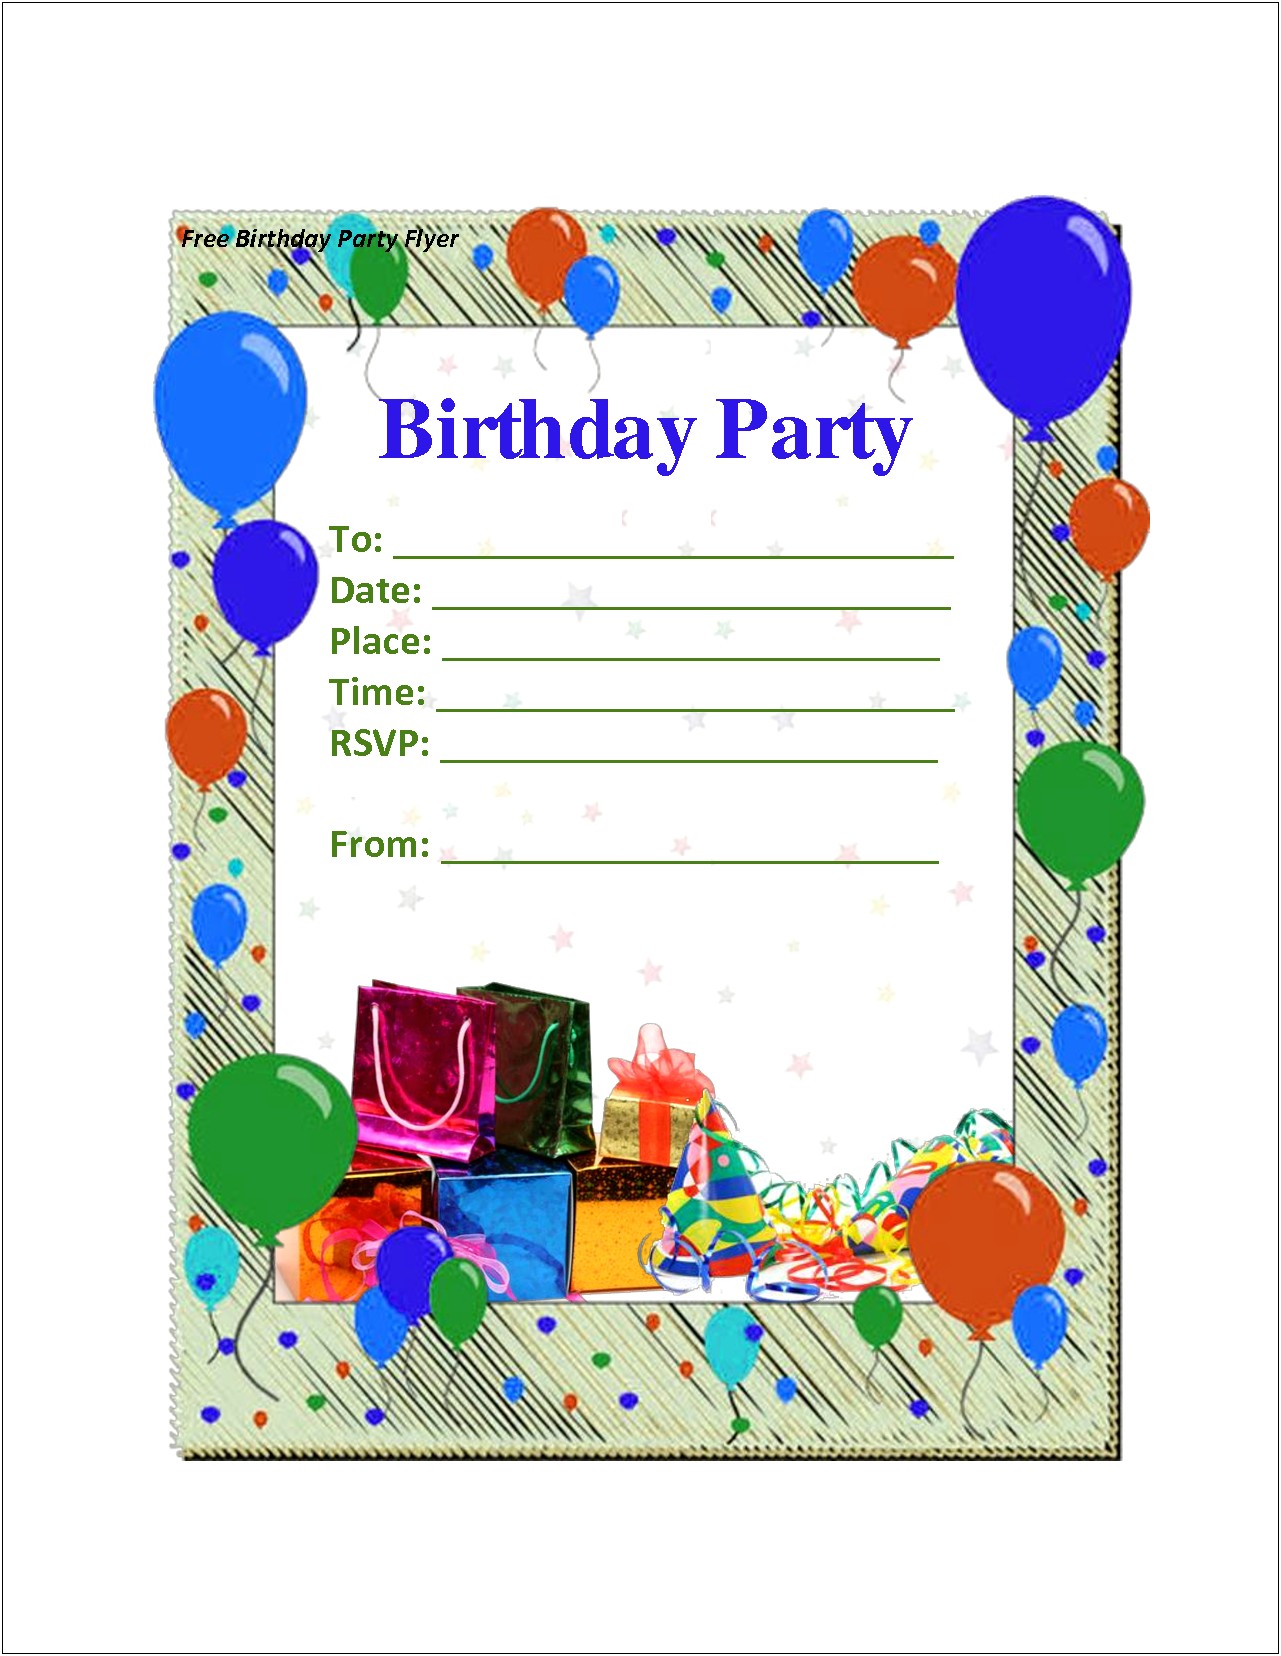 Birthday Invitation Templates Free Microsoft Word